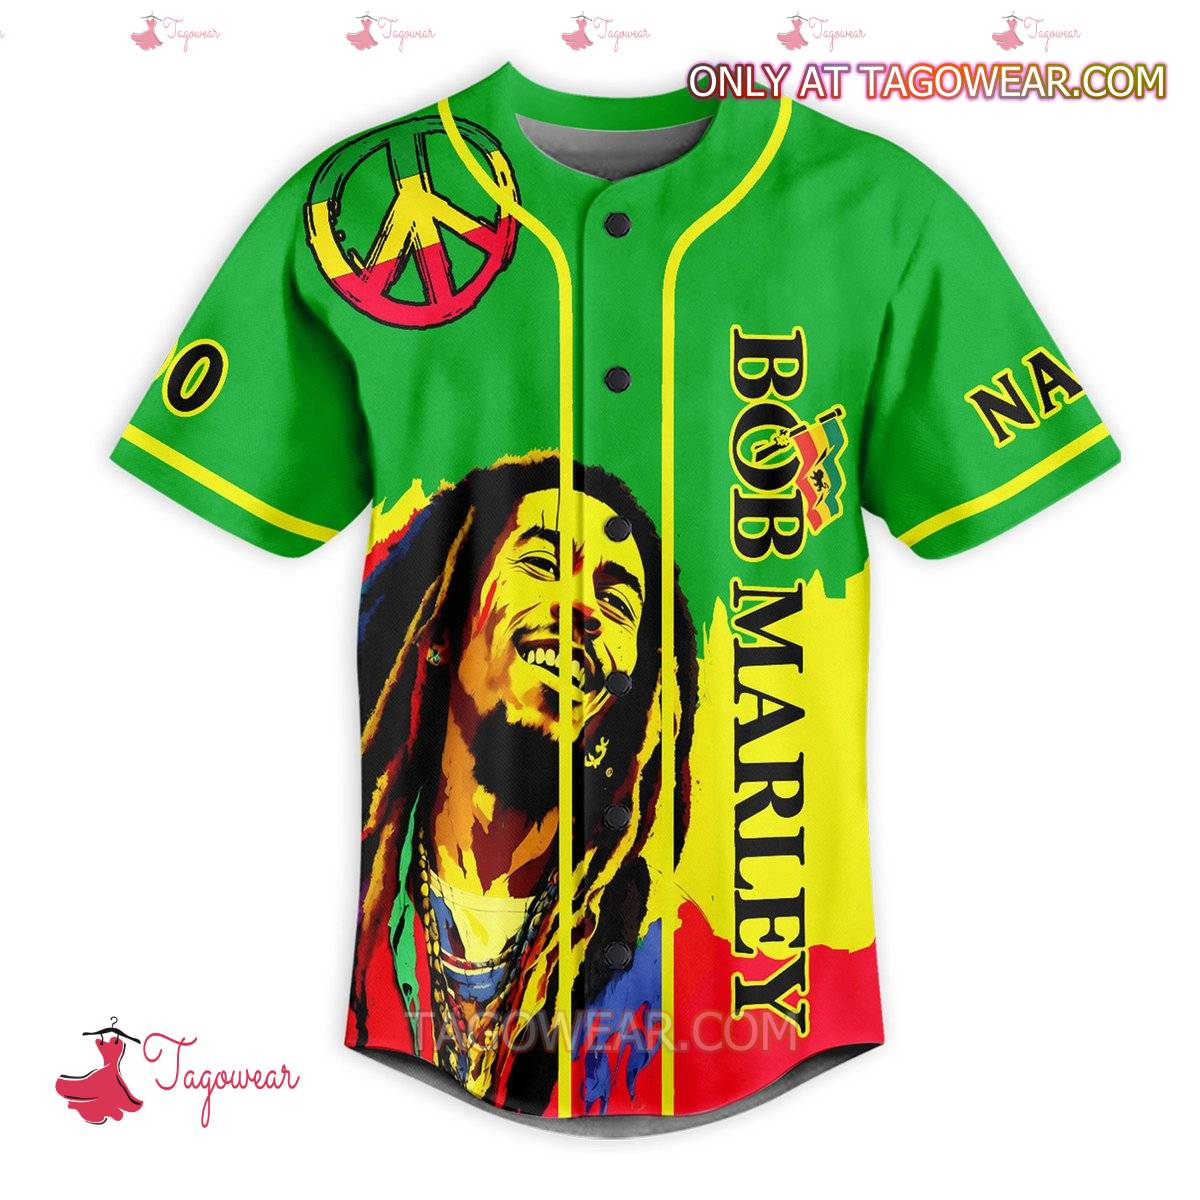 Bob Marley Rastafari Is Not A Culture It's A Reality Personalized Baseball Jersey a